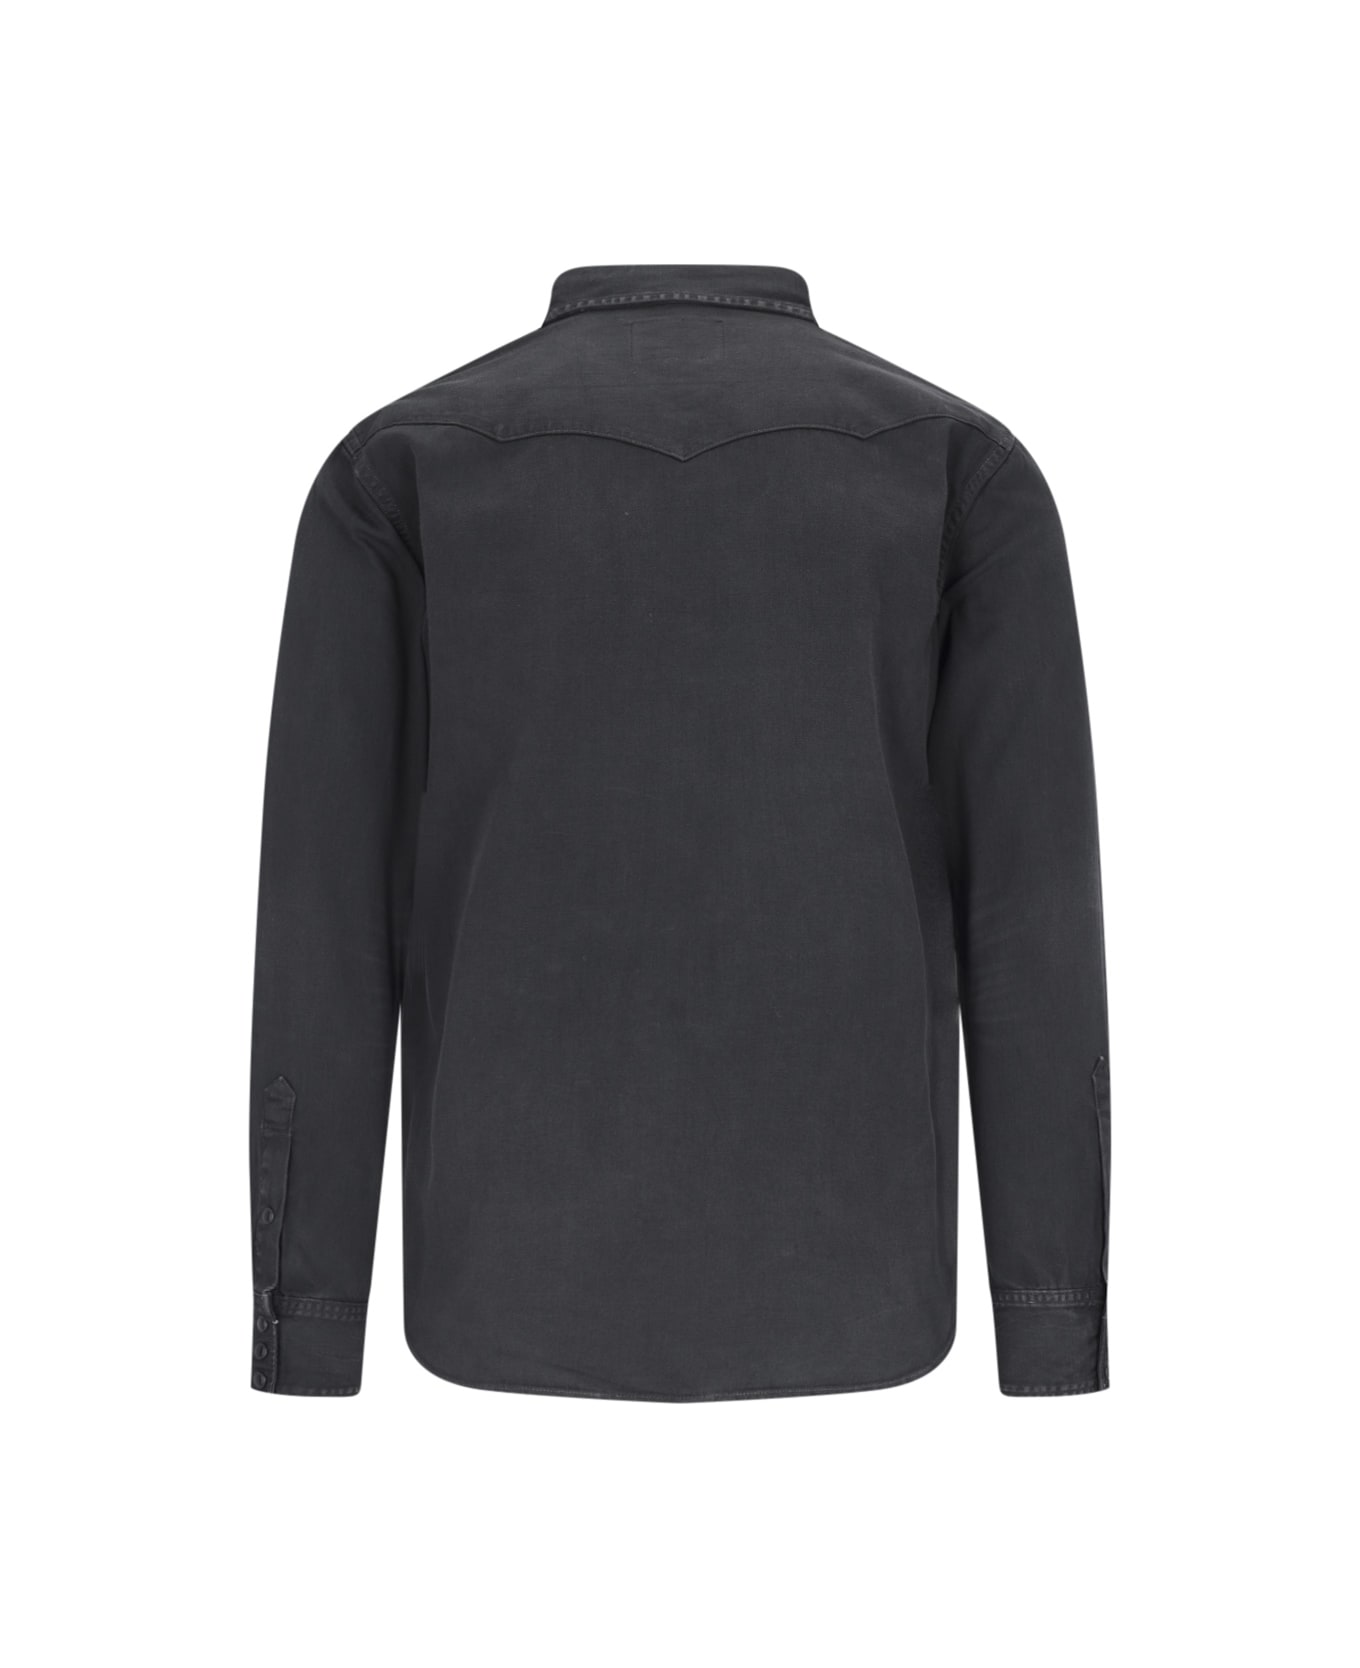 Polo Ralph Lauren 'heritage Western' Shirt - Black  